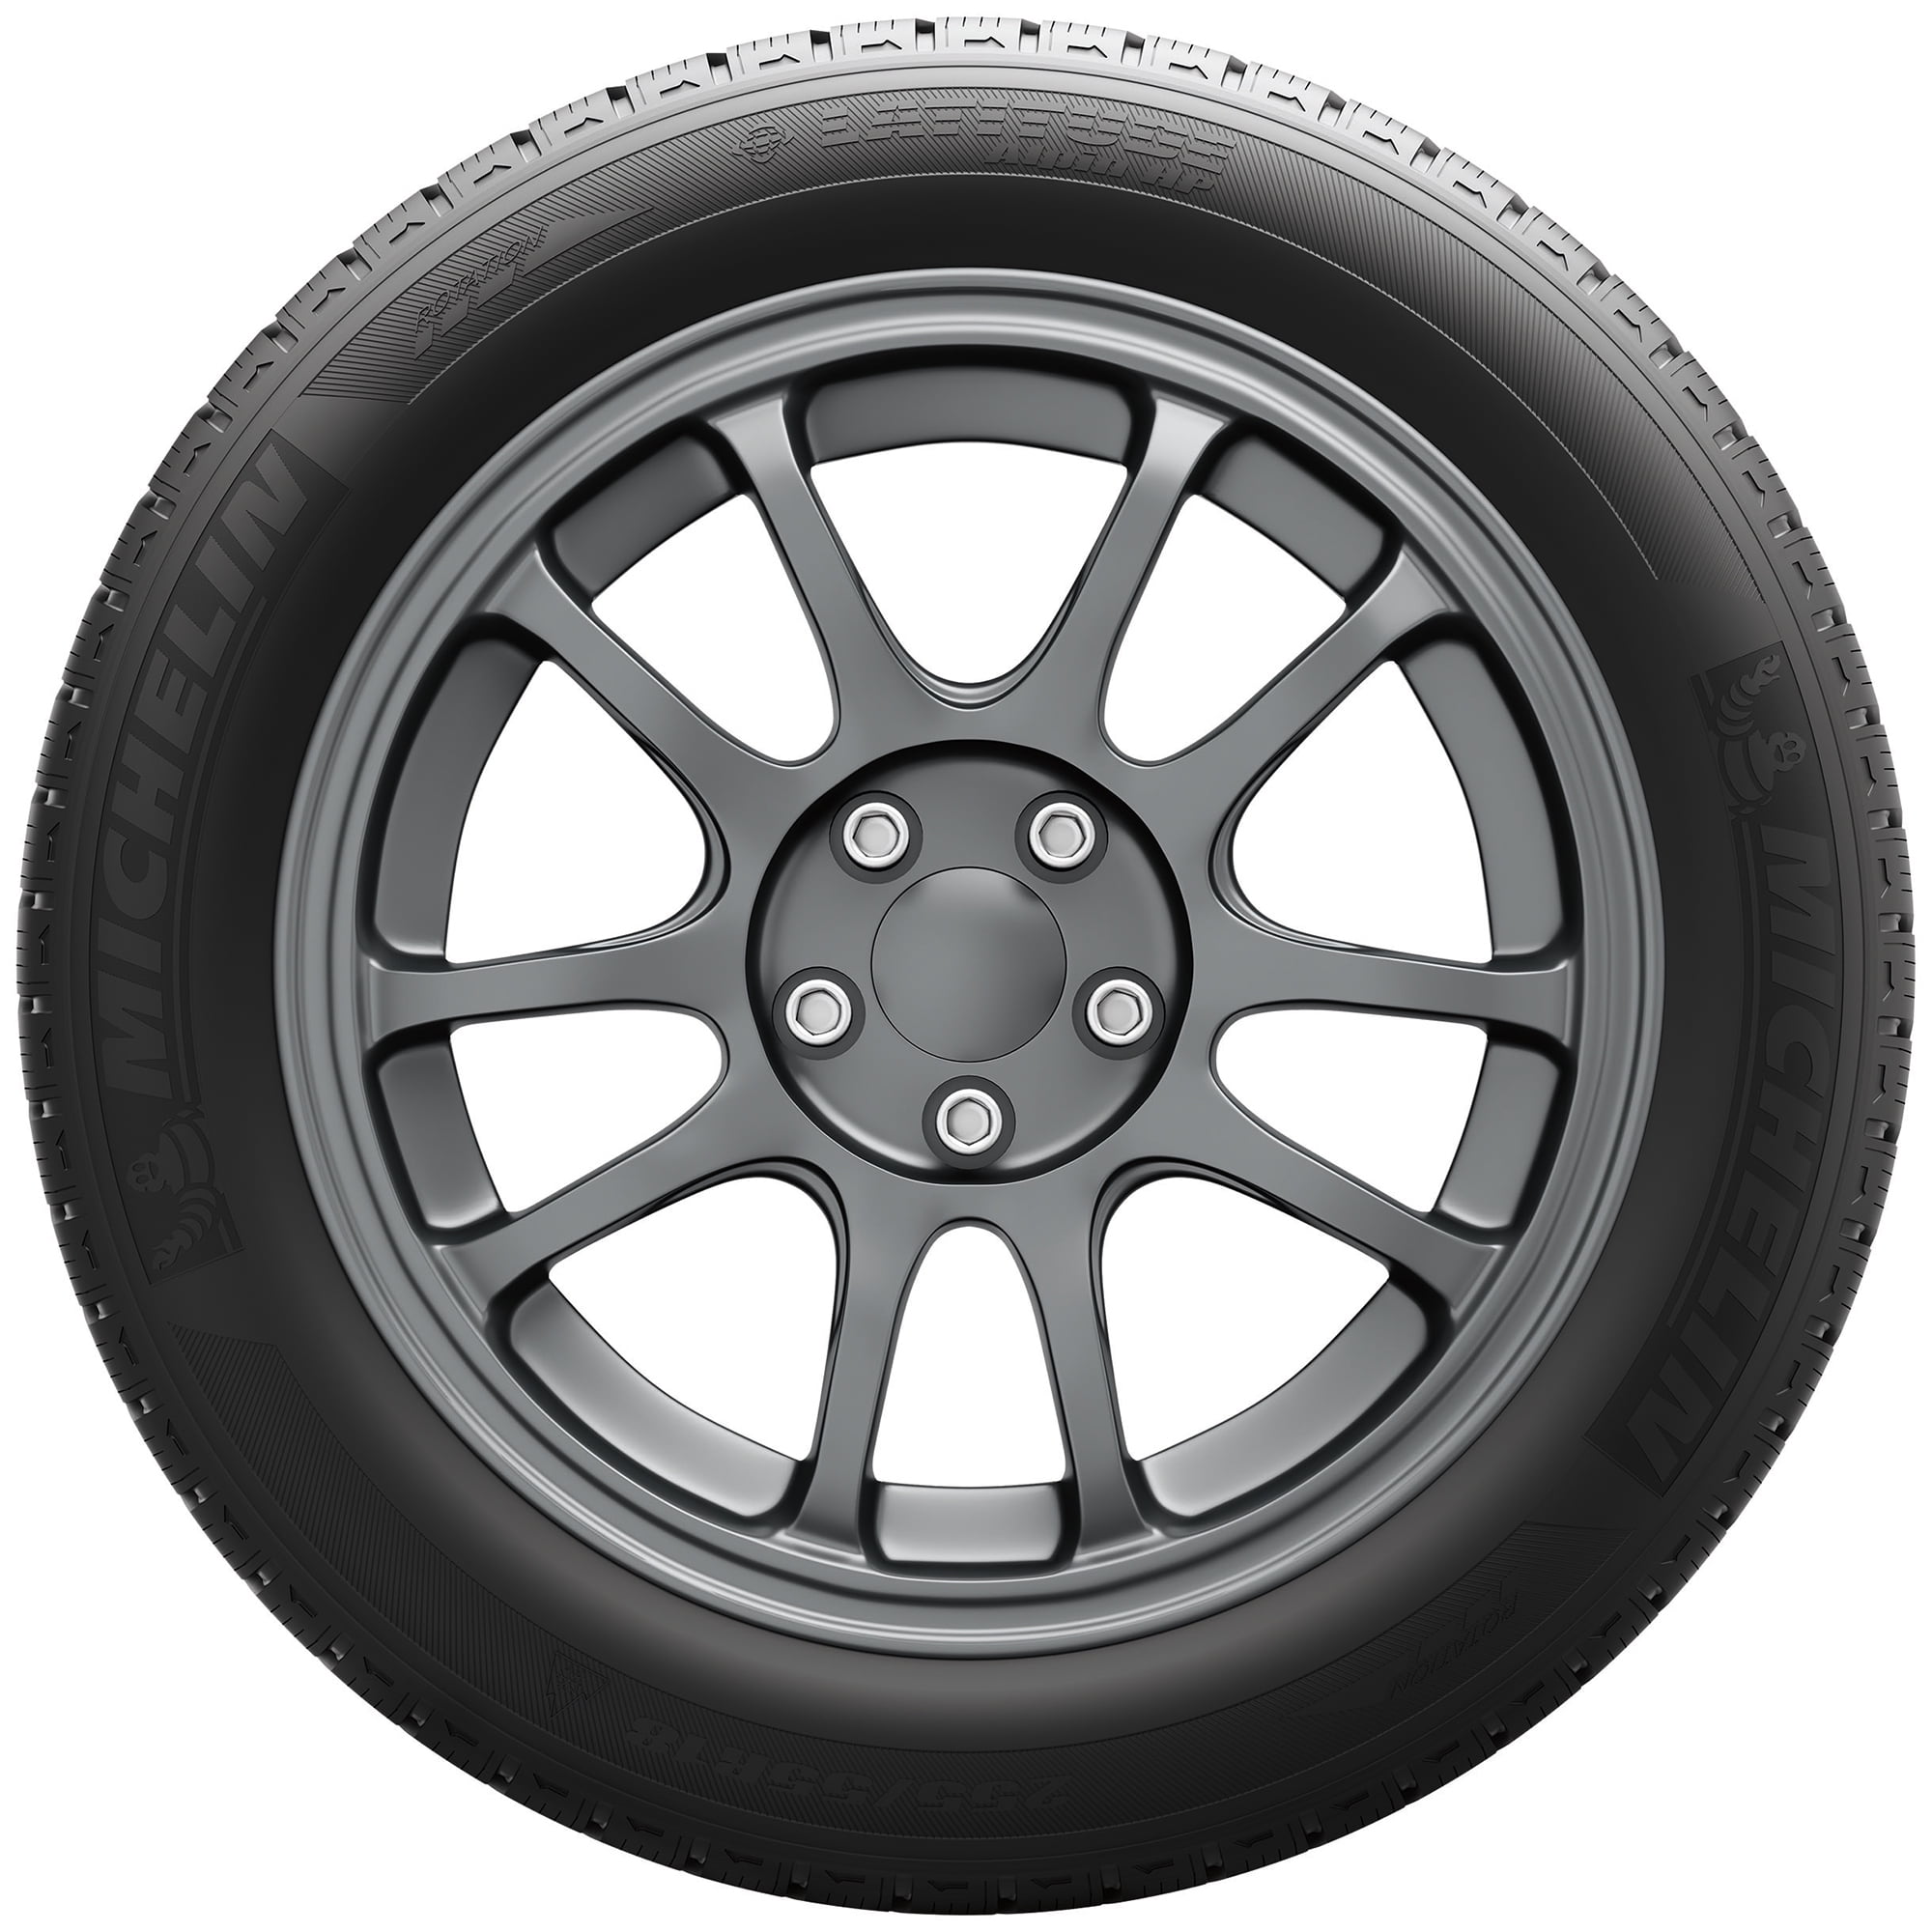 Michelin Latitude Alpin High Performance Tire 255/55R18 105H